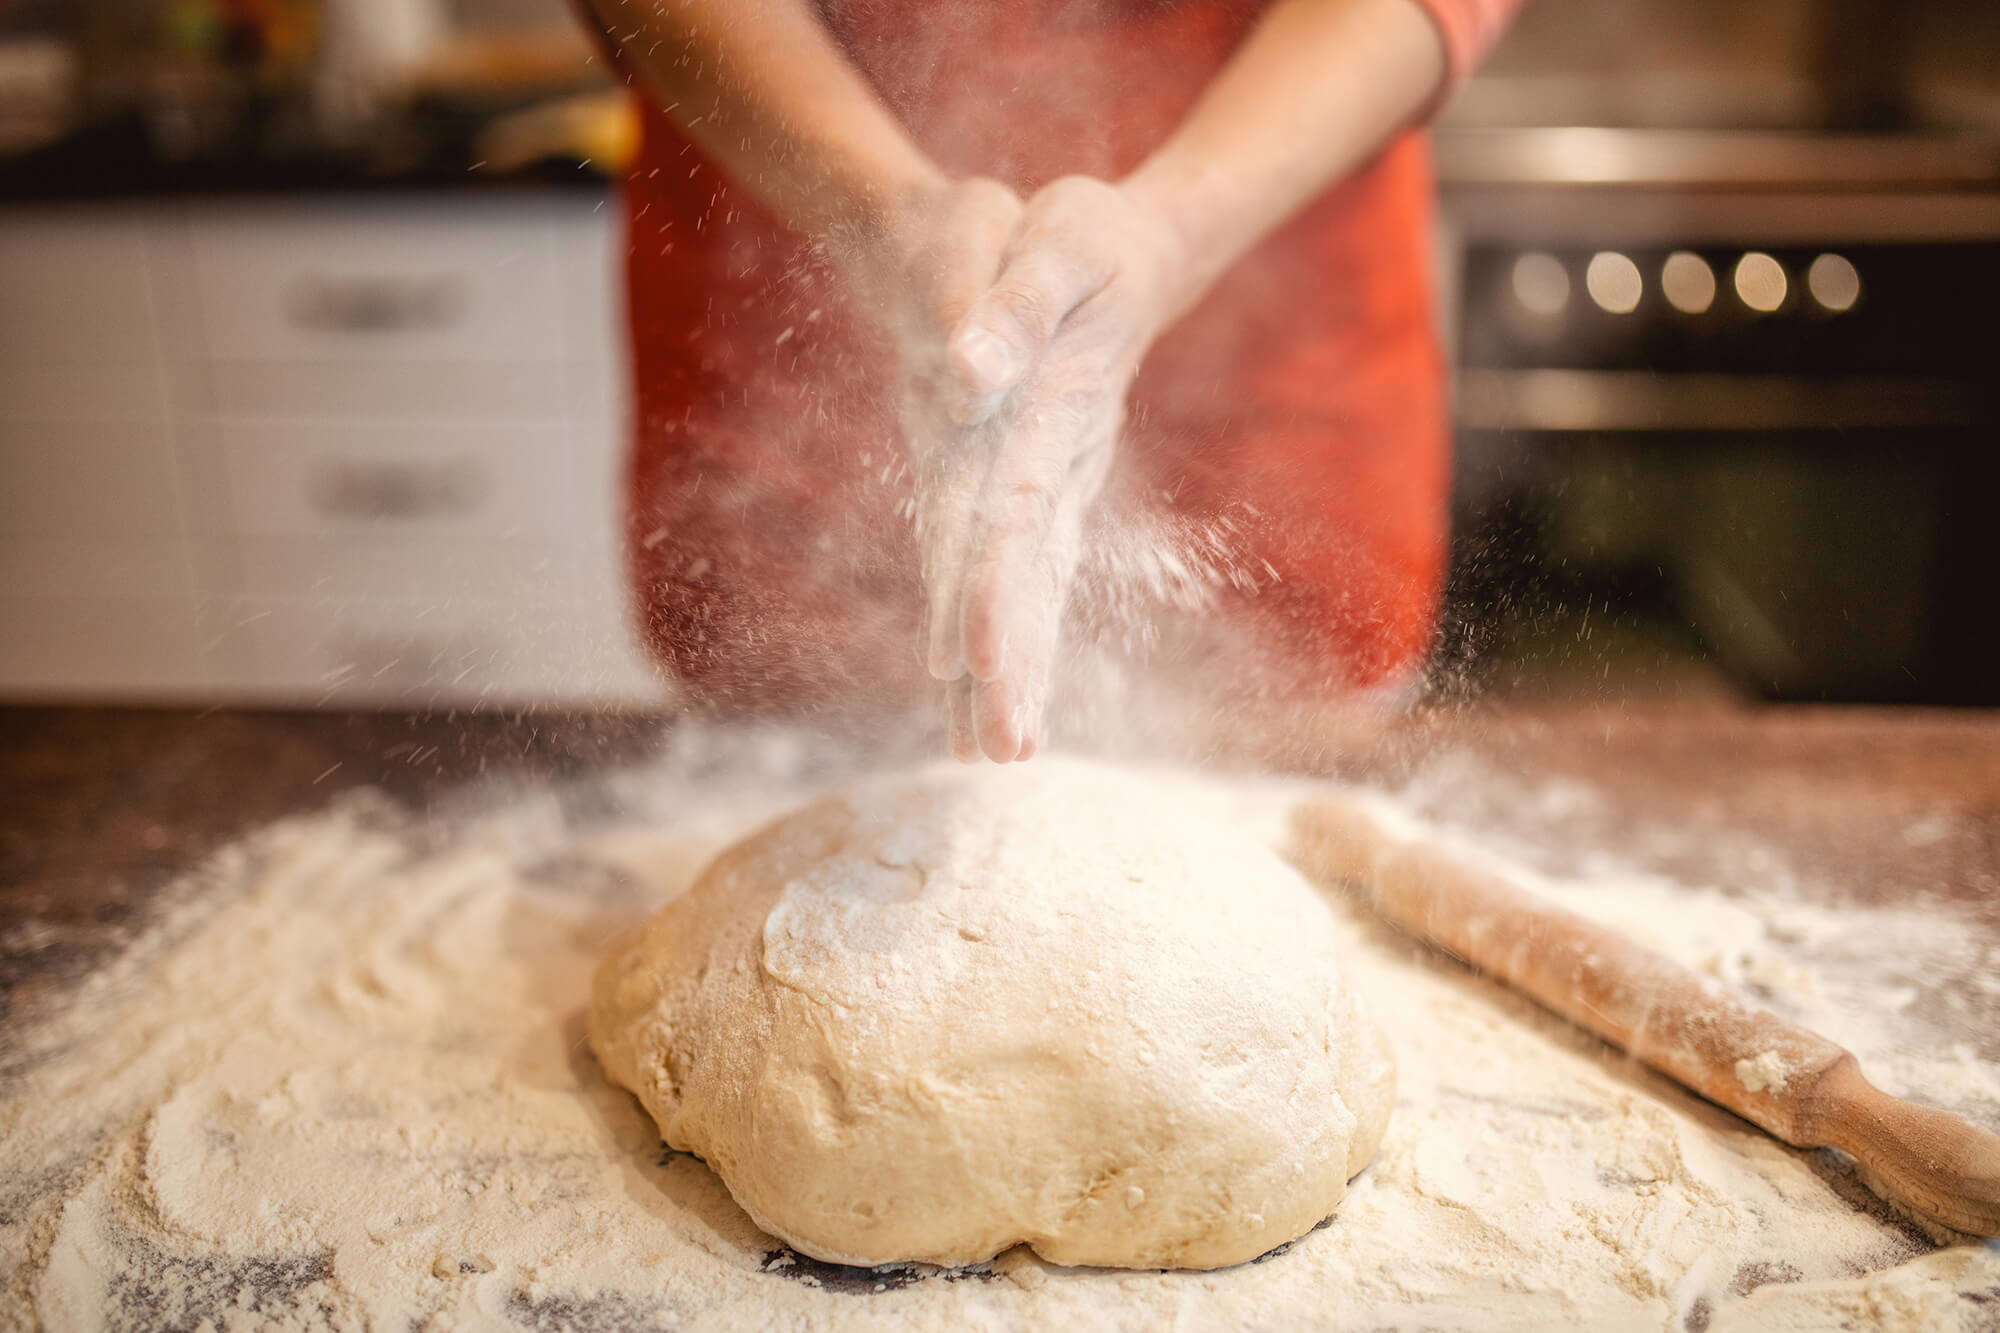 Someone kneading dough